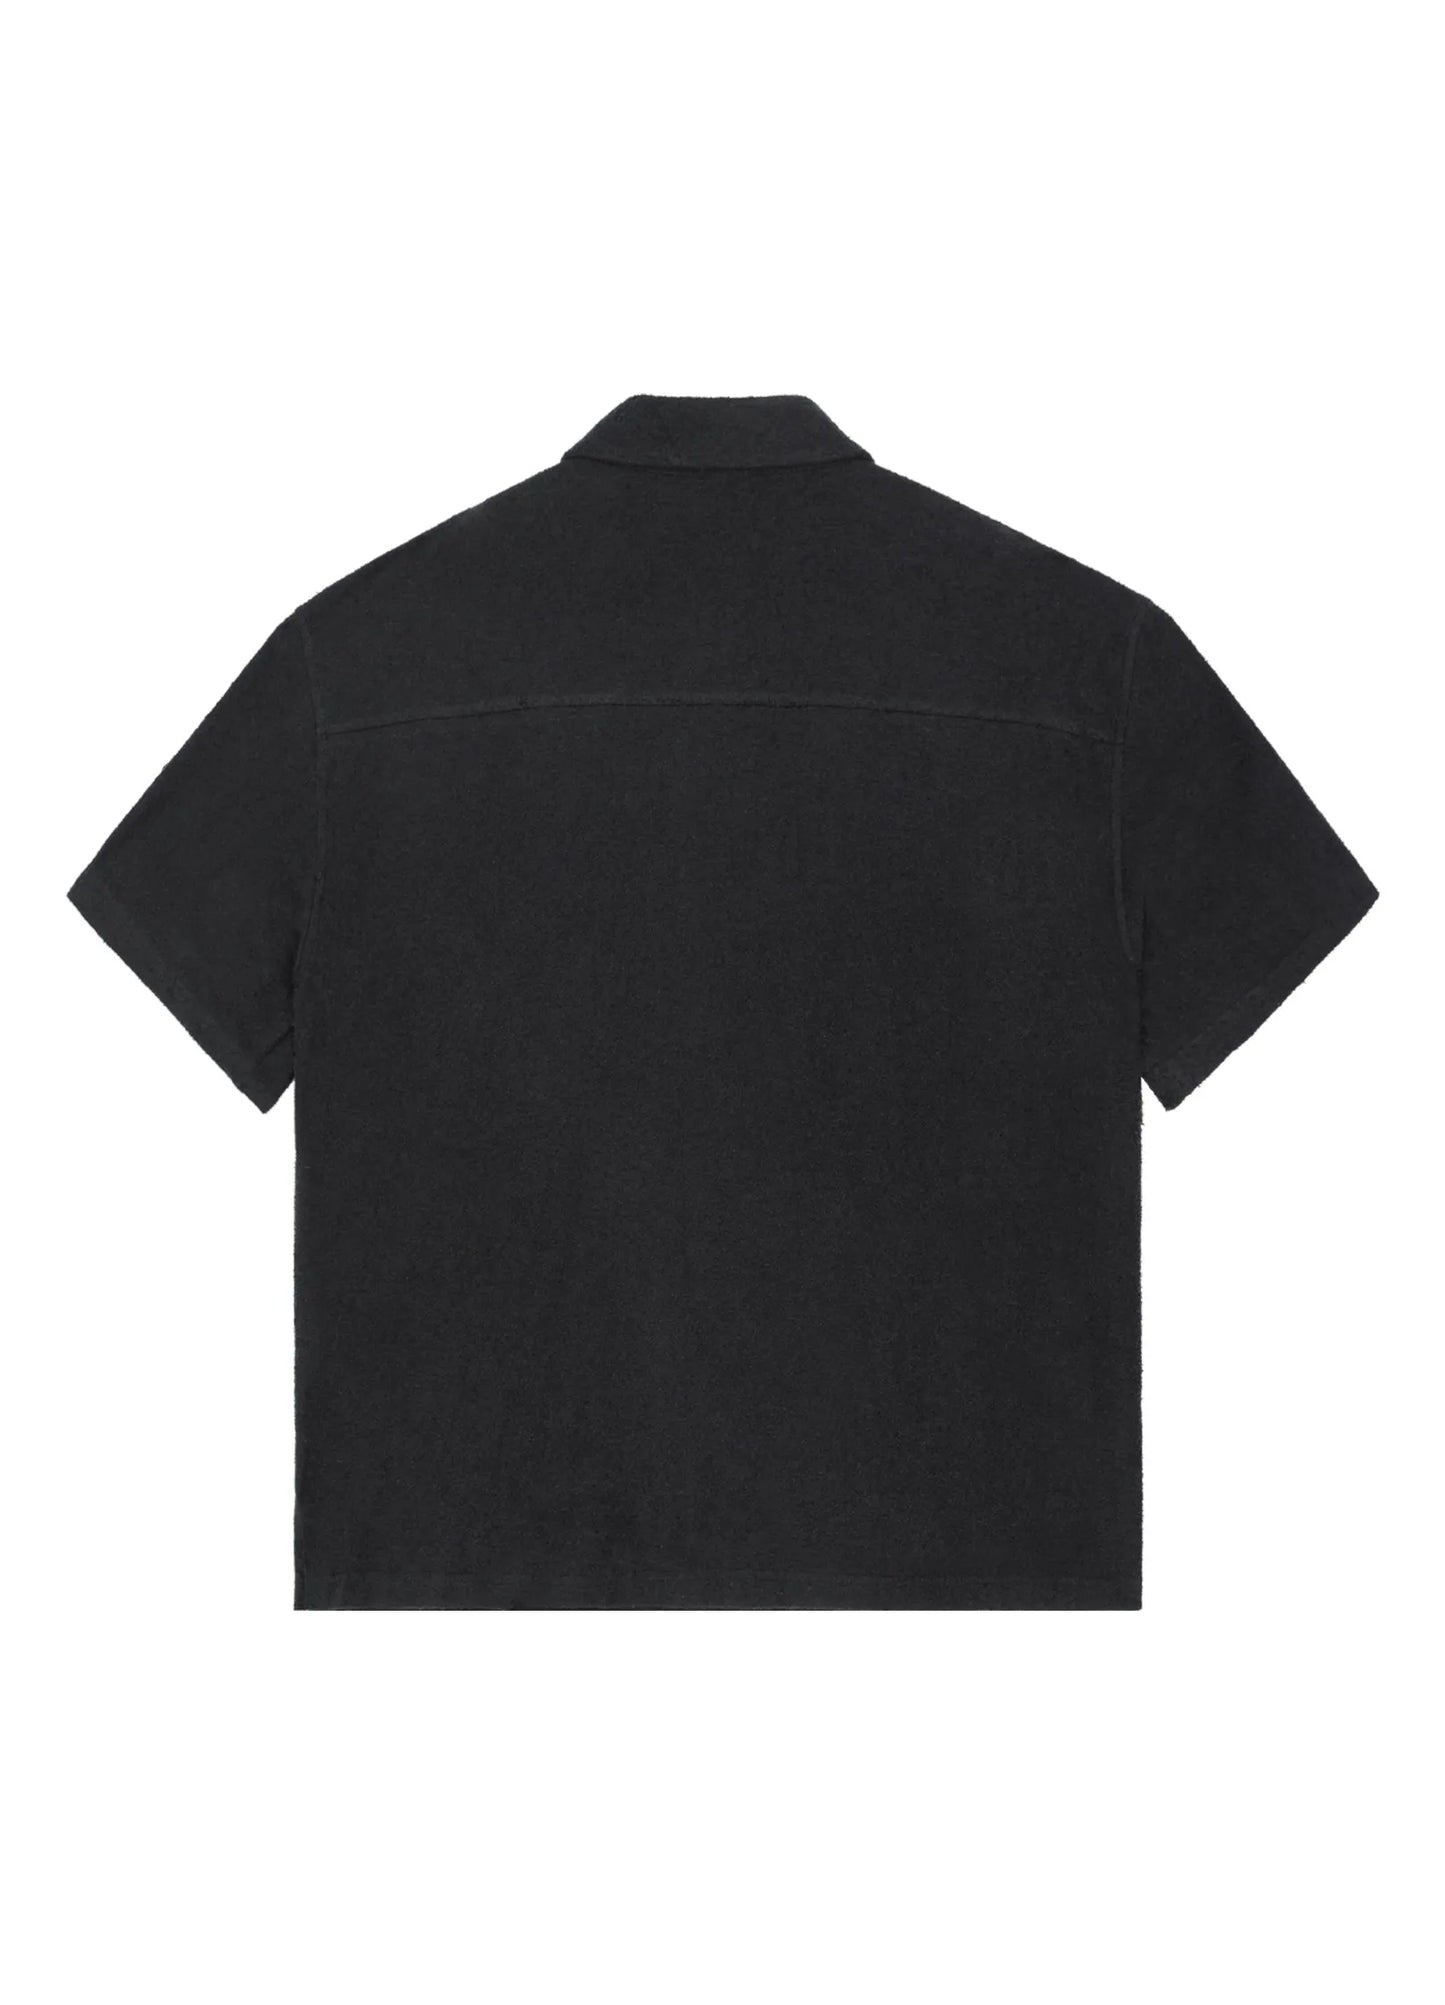 Terrycloth Knit Short Sleeve Shirt